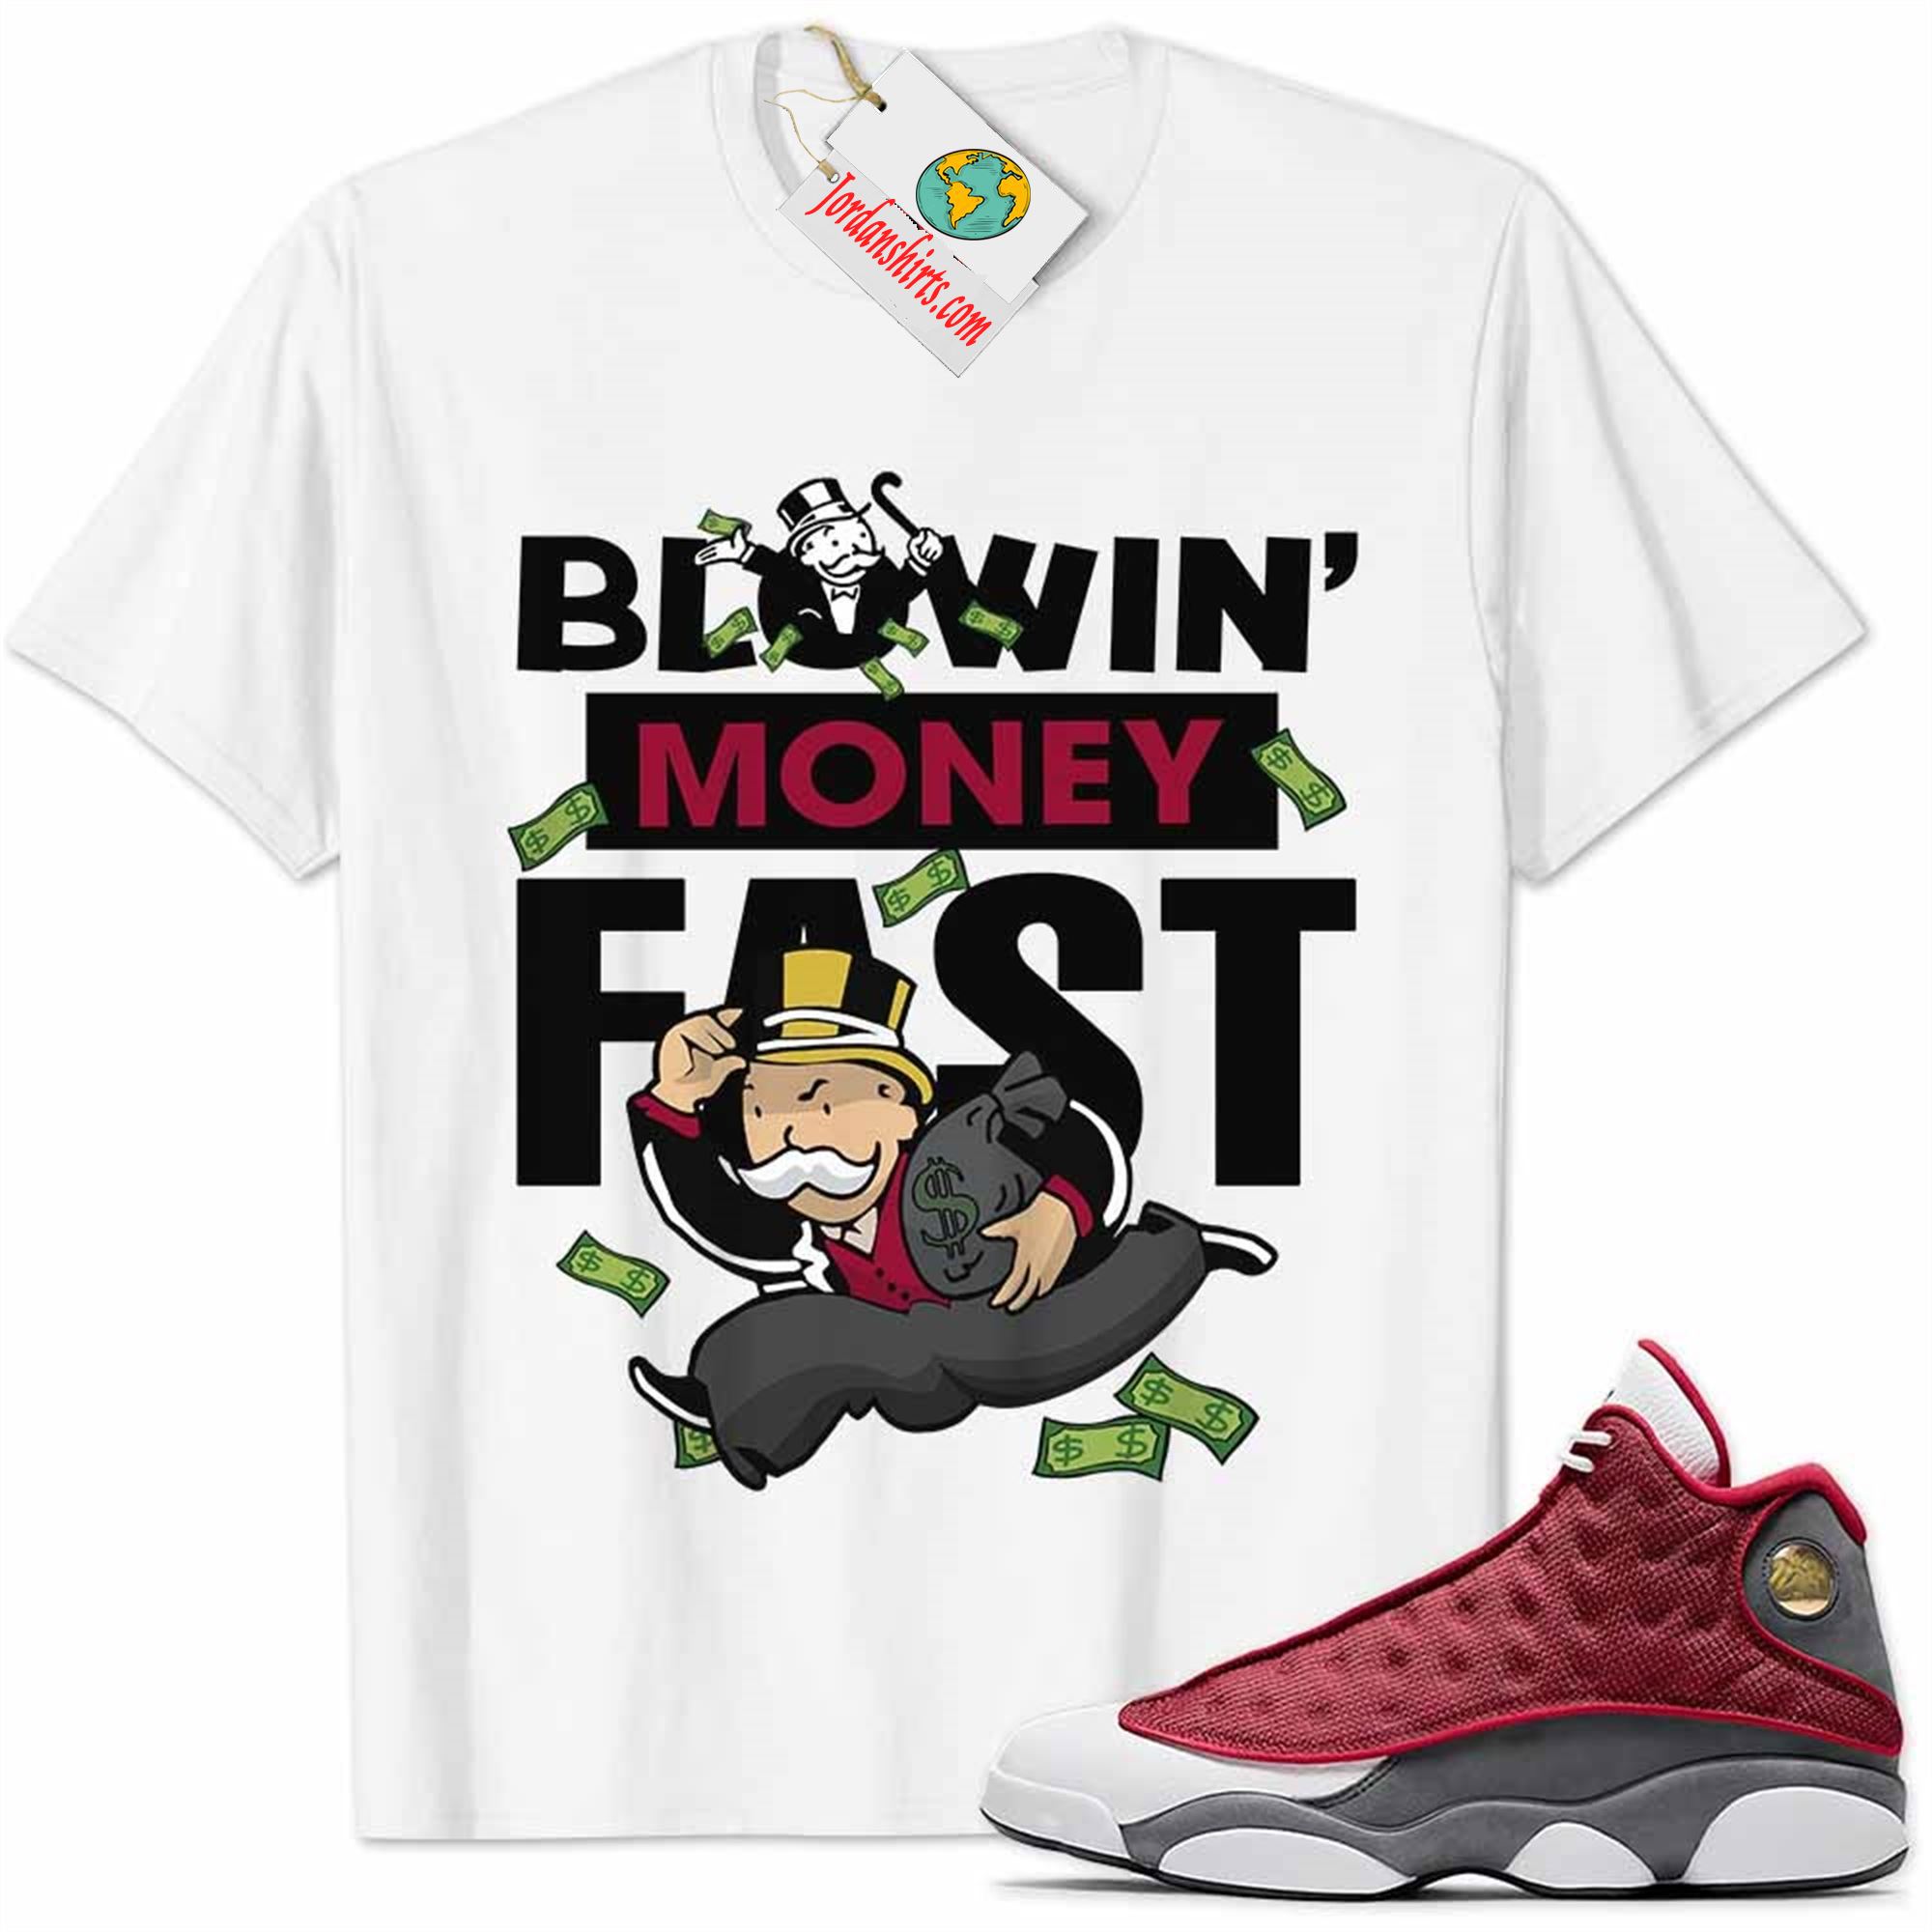 Jordan 13 Shirt, Red Flint 13s Shirt Blowin Money Fast Mr Monopoly White Full Size Up To 5xl